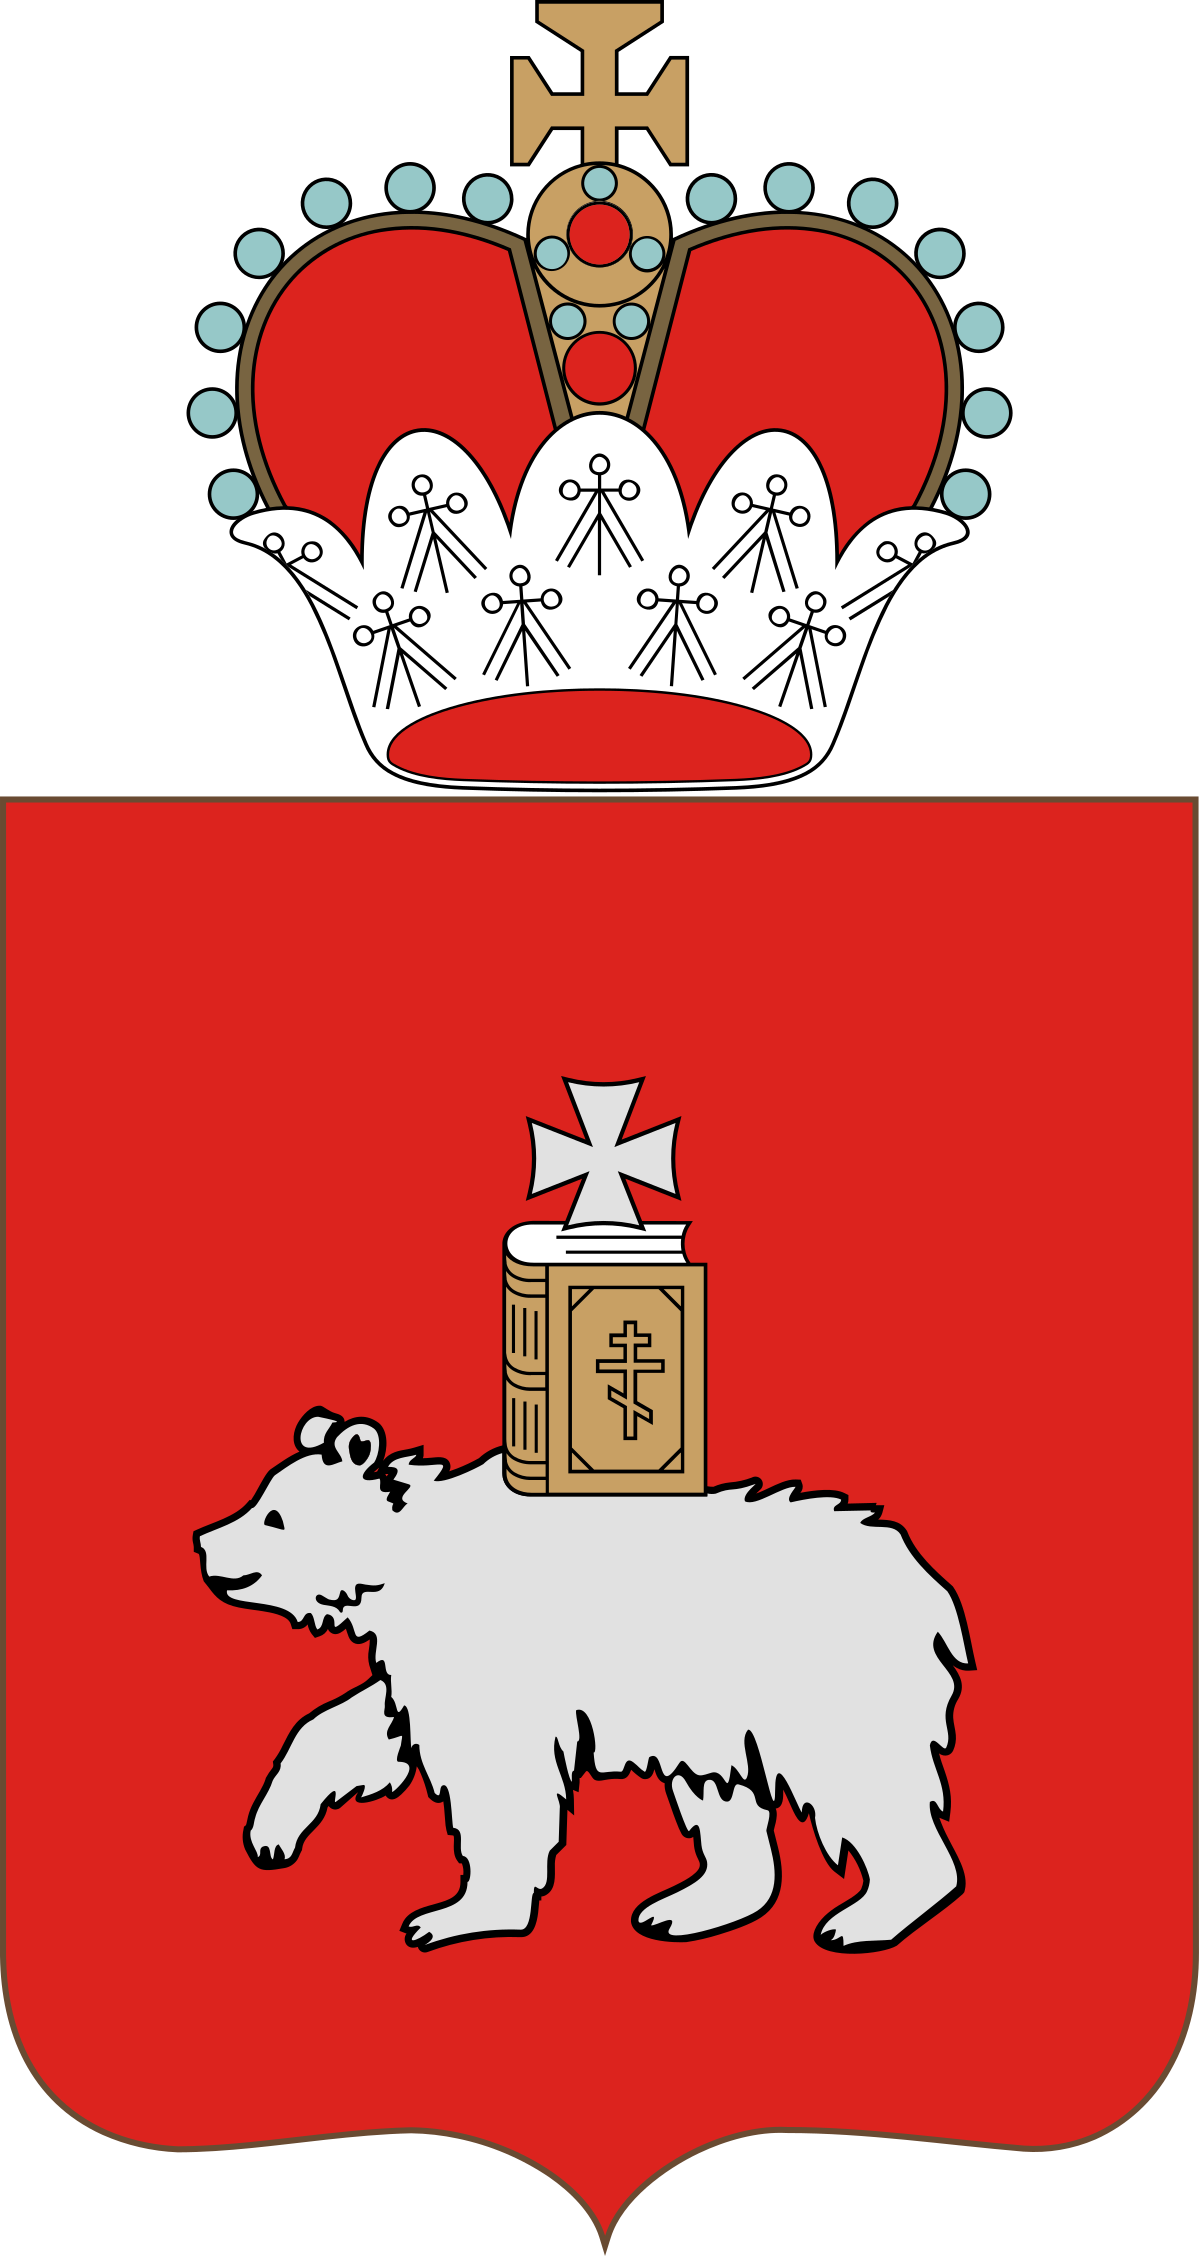 https://upload.wikimedia.org/wikipedia/commons/thumb/1/1b/Coat_of_Arms_of_Perm_Krai.svg/1200px-Coat_of_Arms_of_Perm_Krai.svg.png